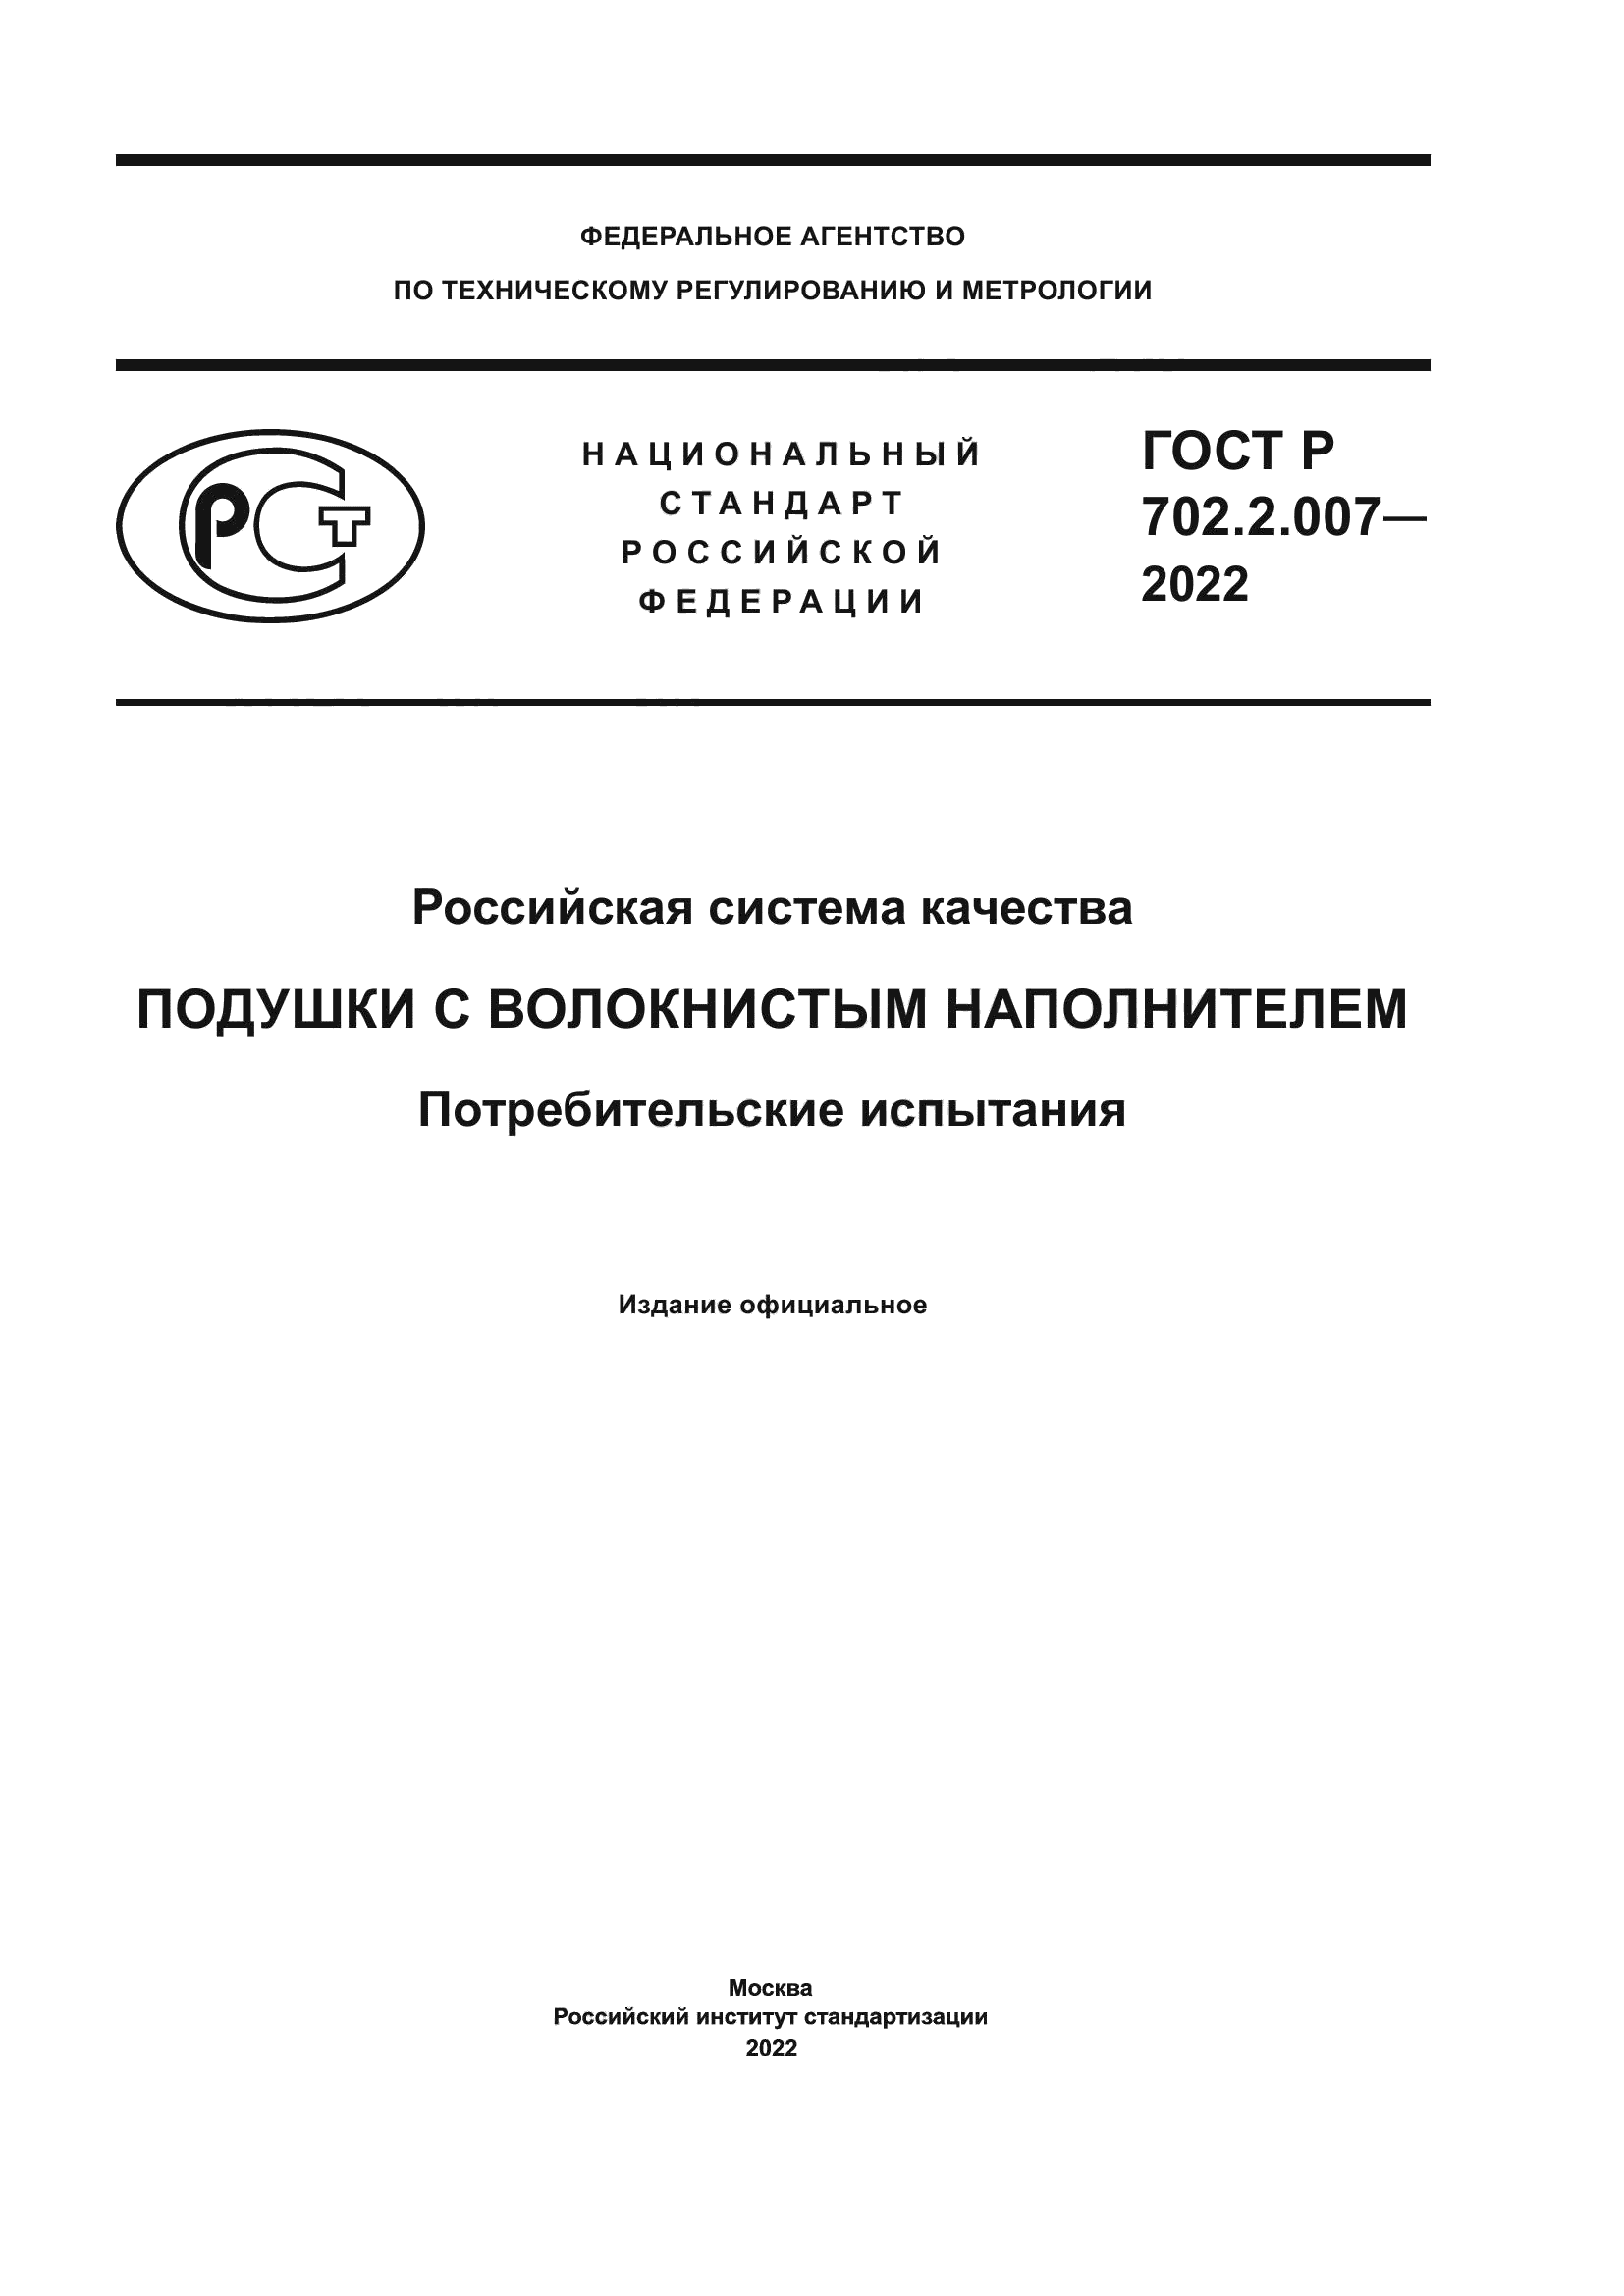 ГОСТ Р 702.2.007-2022